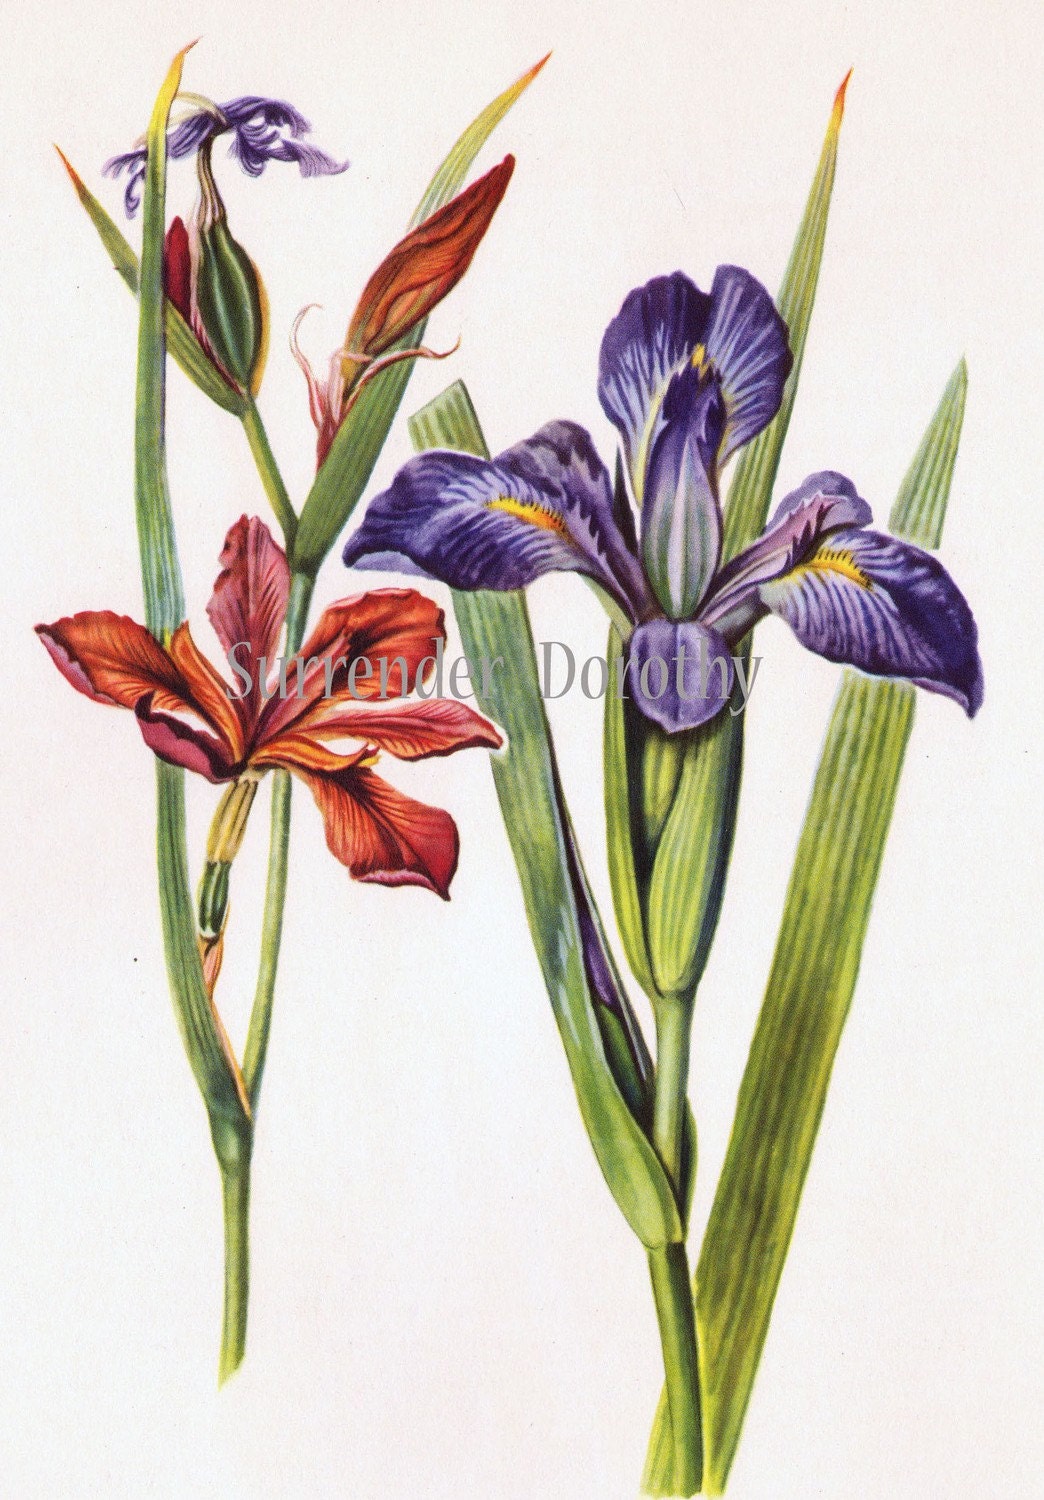 Red Iris Blue Flag Flower Botanical Art Print 1950s Vintage